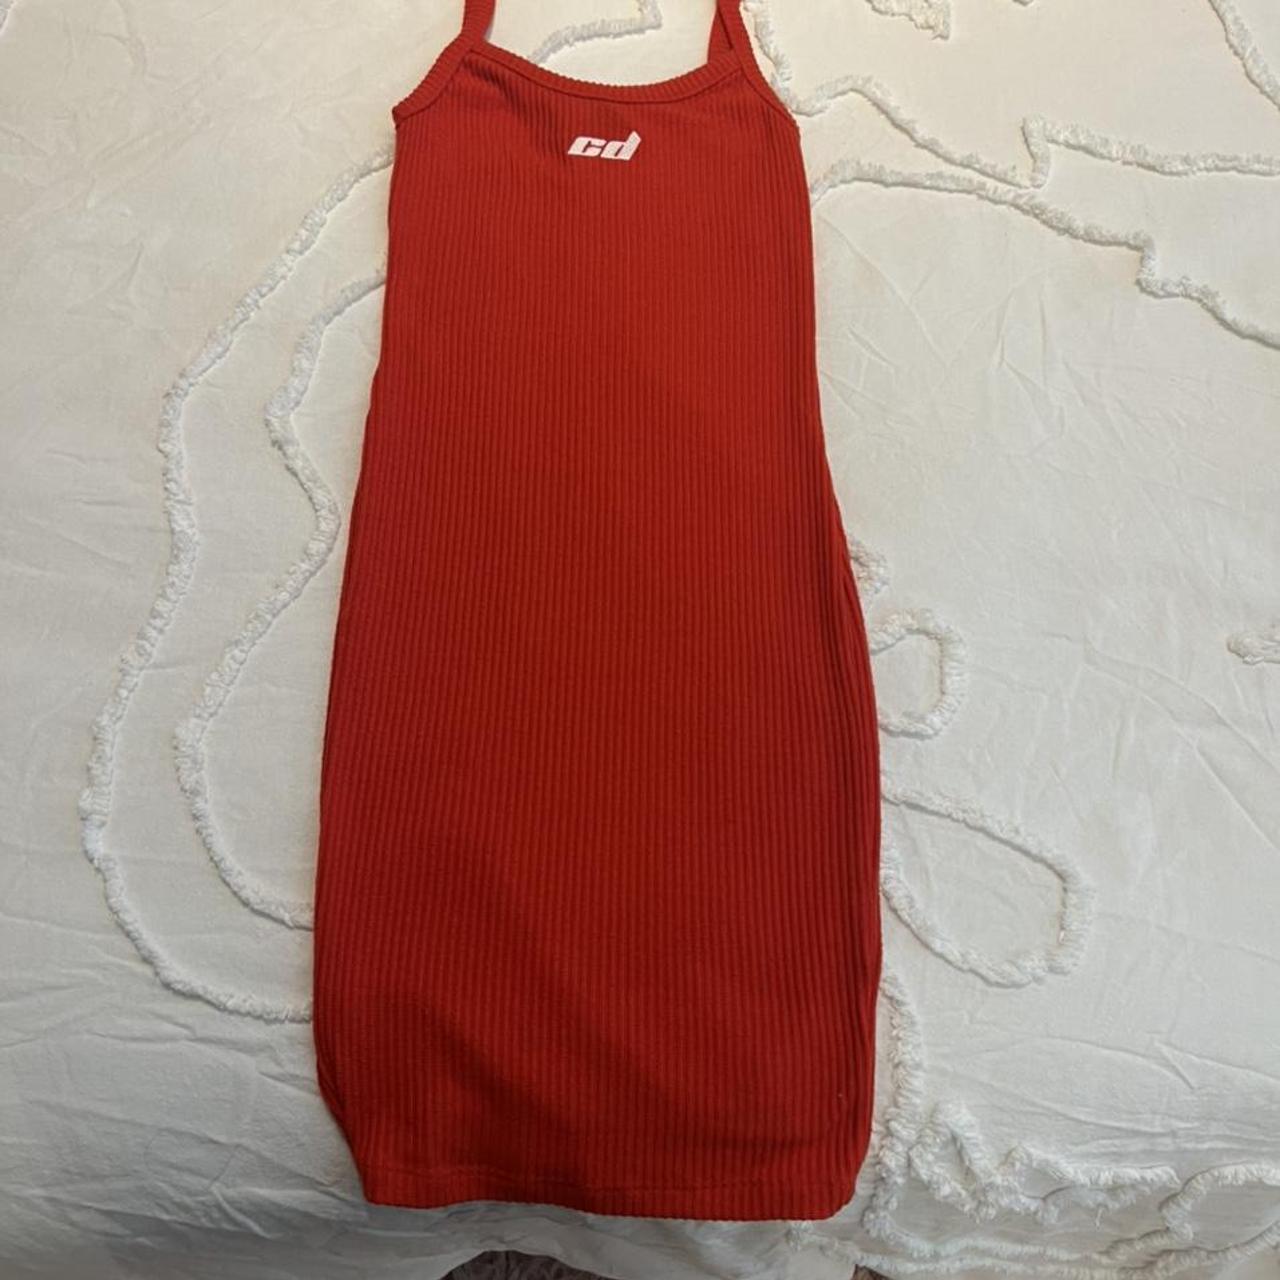 Product Image 3 - Ribbed Cami Mini Dress

Original Price